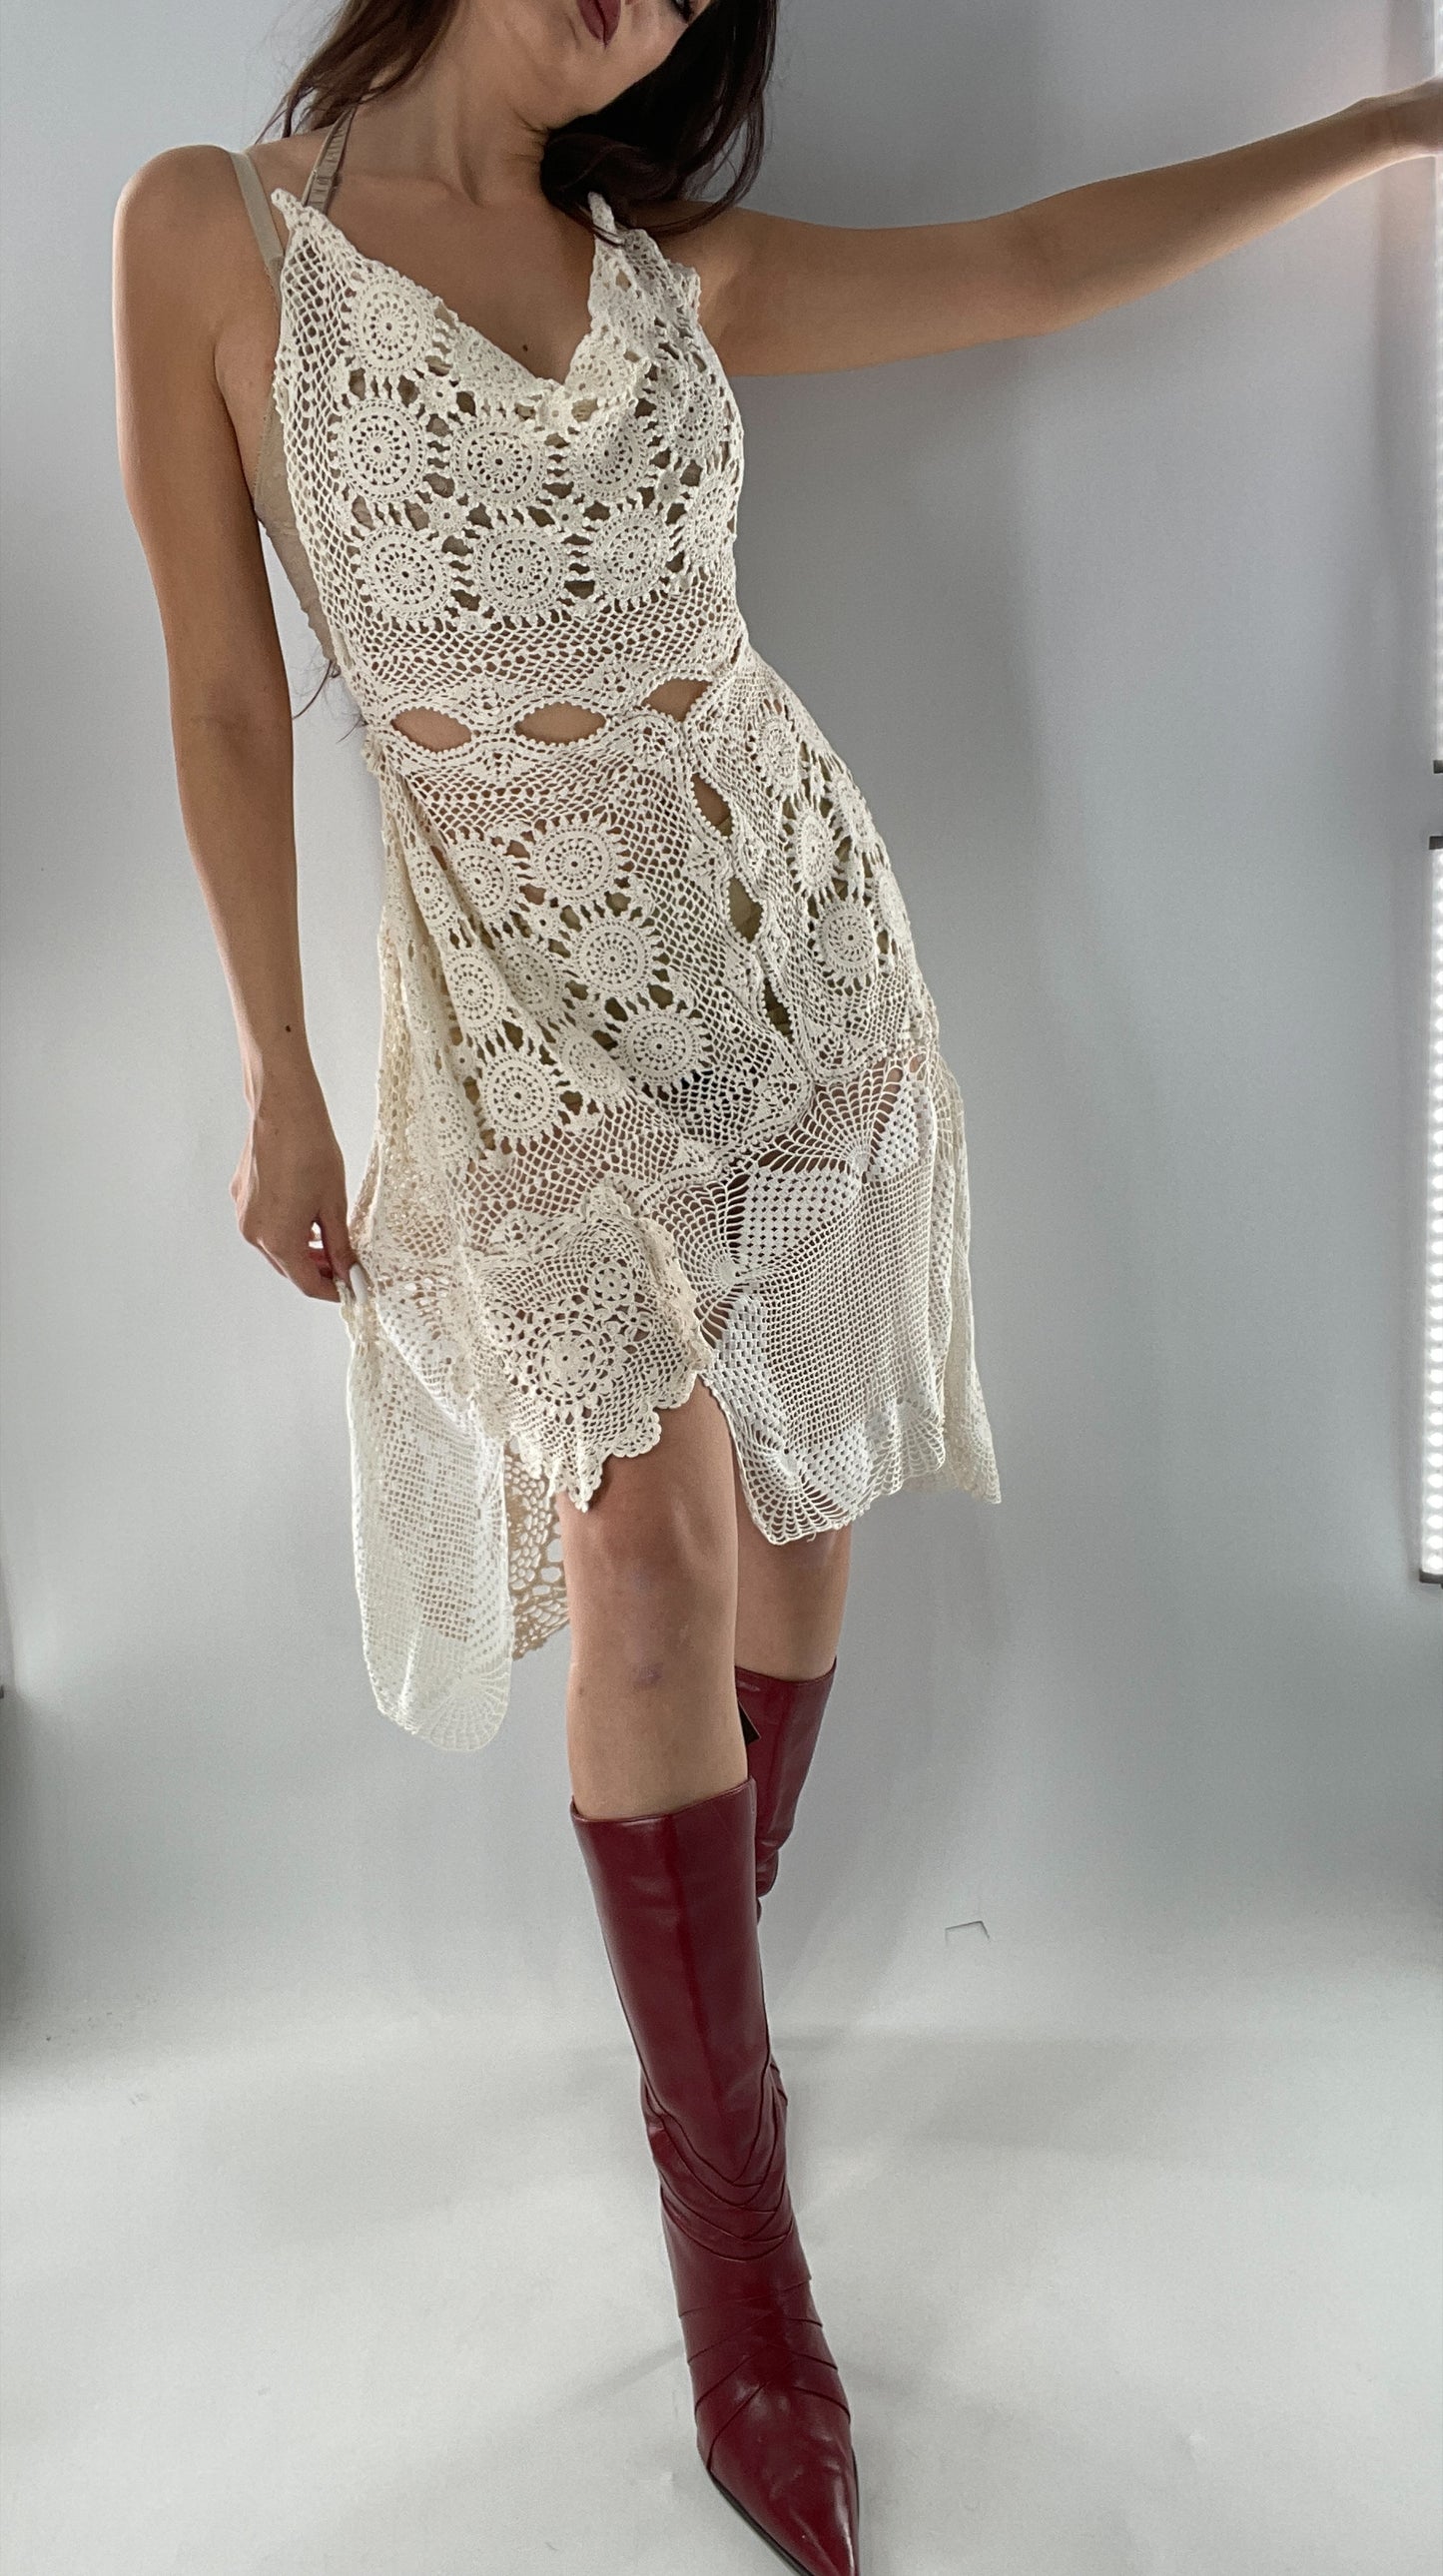 Vintage Handmade Crochet Cottage Adjustable Dress with Open, Low Back (One Size)